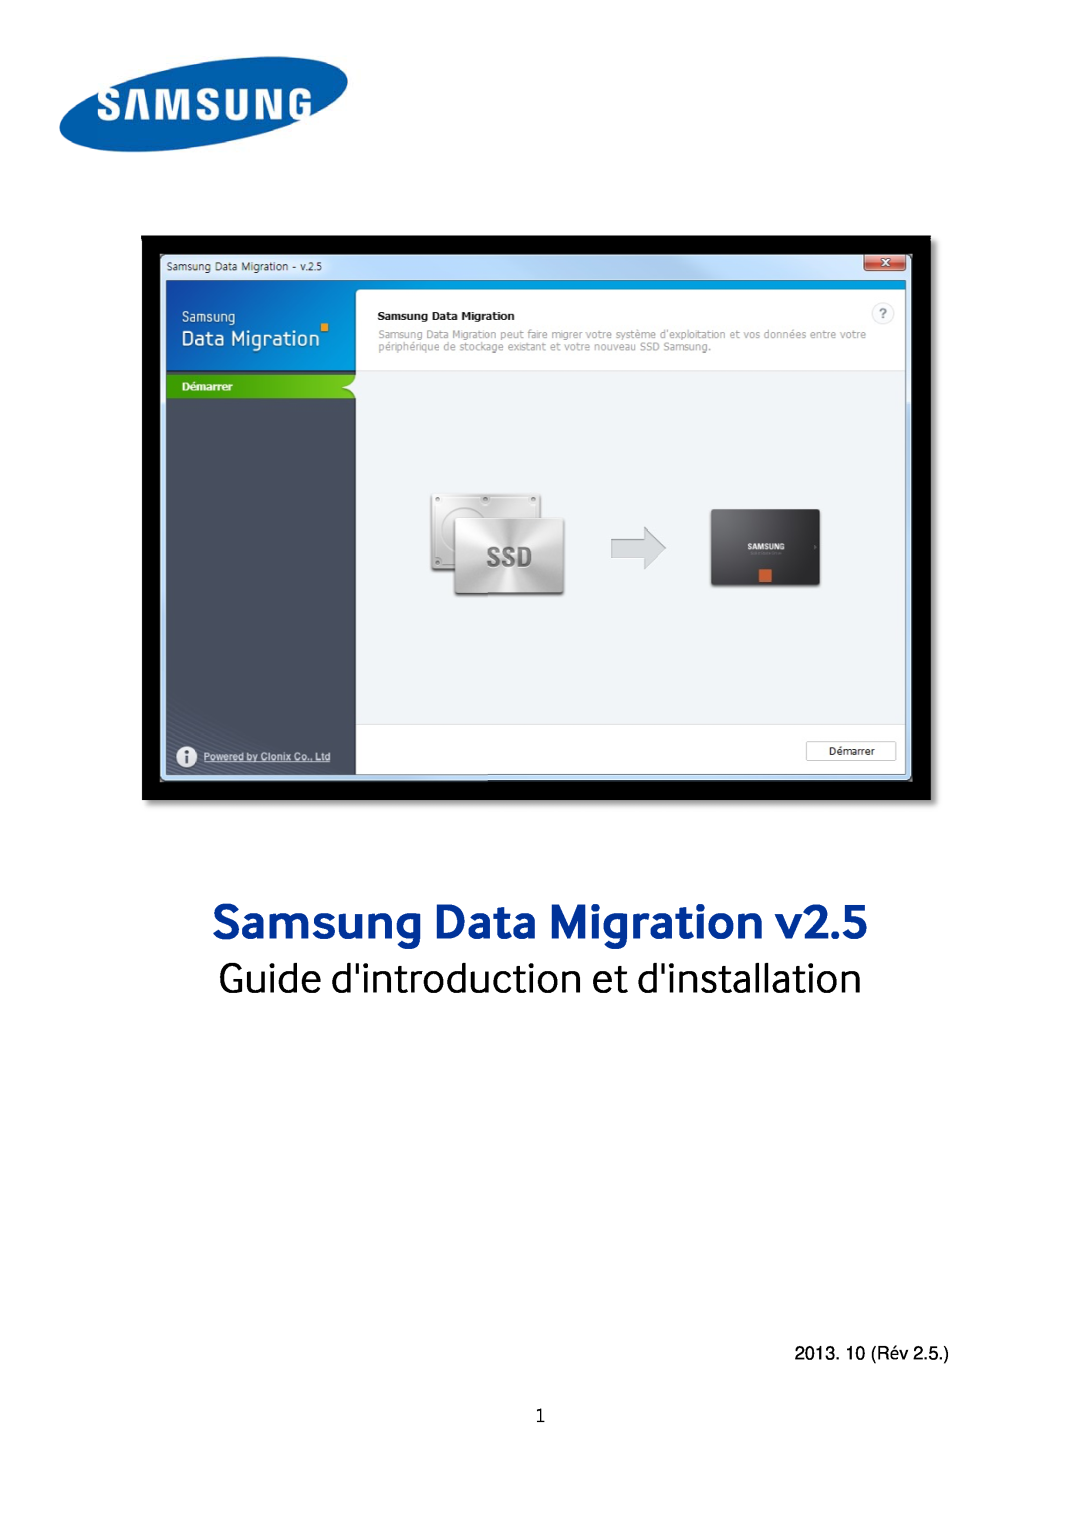 Samsung MZ-7TD250KW, MZ-7TD500BW manual Guía de instalación e introducción, Samsung Data Migration, 2013. 10 Rev 